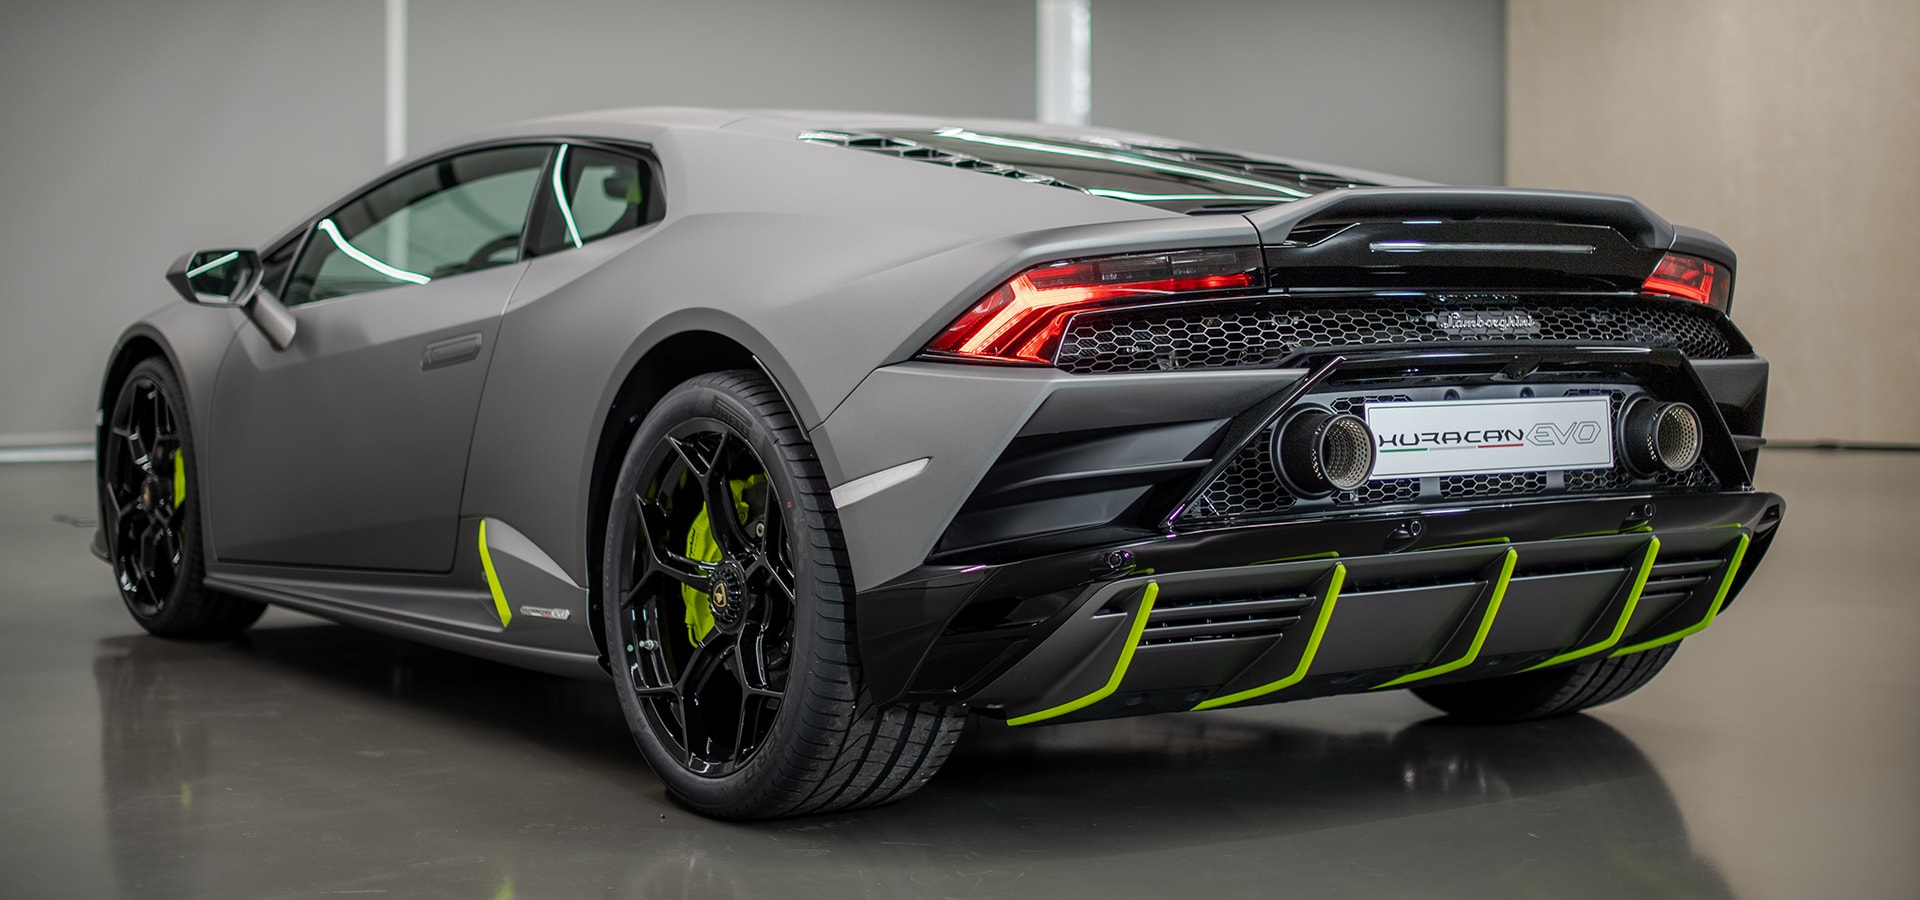 Lamborghini-Autoabdeckung✅, maßgeschneidert für Ihr Fahrzeug,  Lamborghini-Fahrzeugautoabdeckung✅ Autoschutz für alle Lamborghini-Modelle✅  Urus Huracan